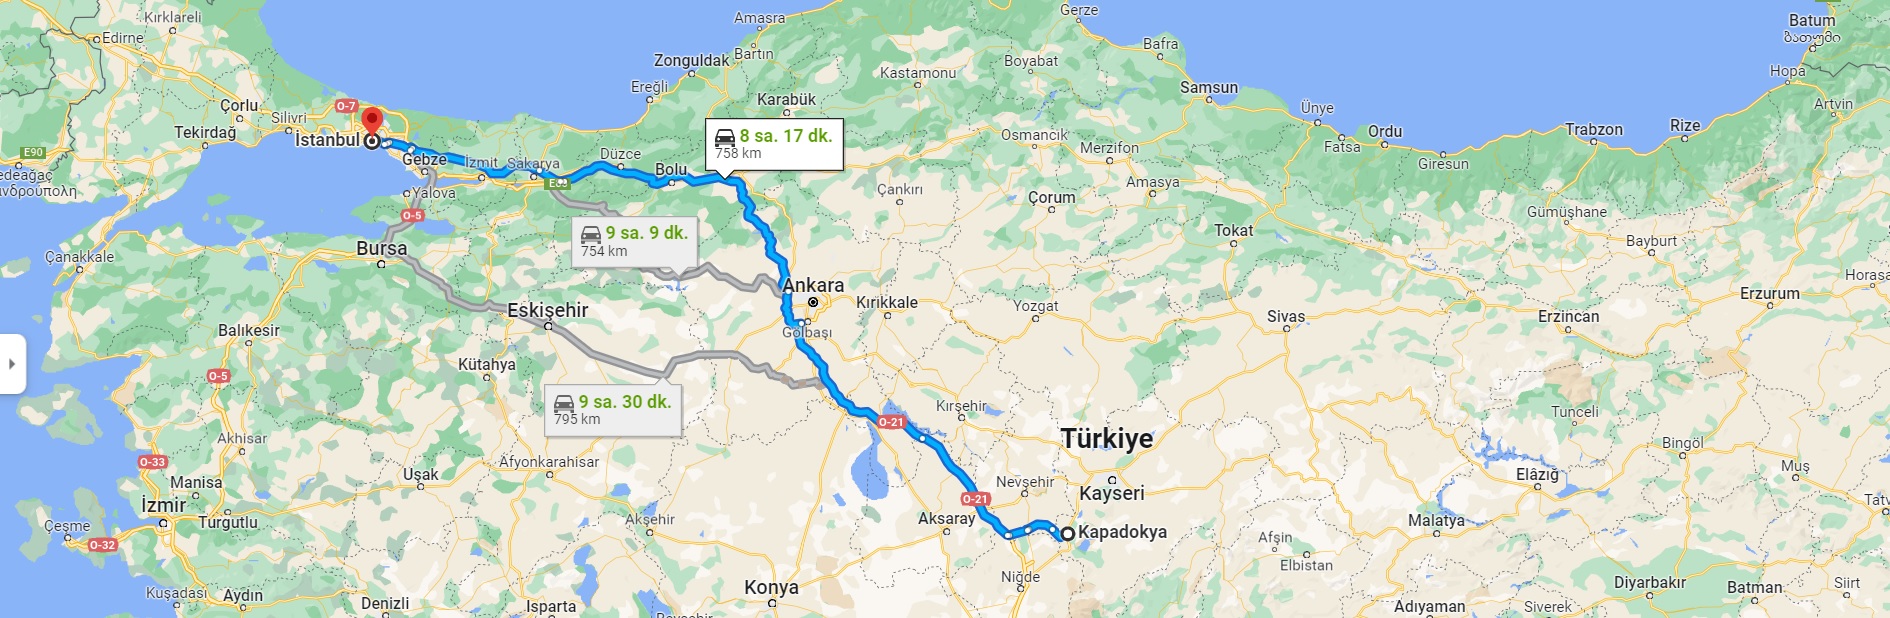 How Far is Istanbul From Cappadocia?